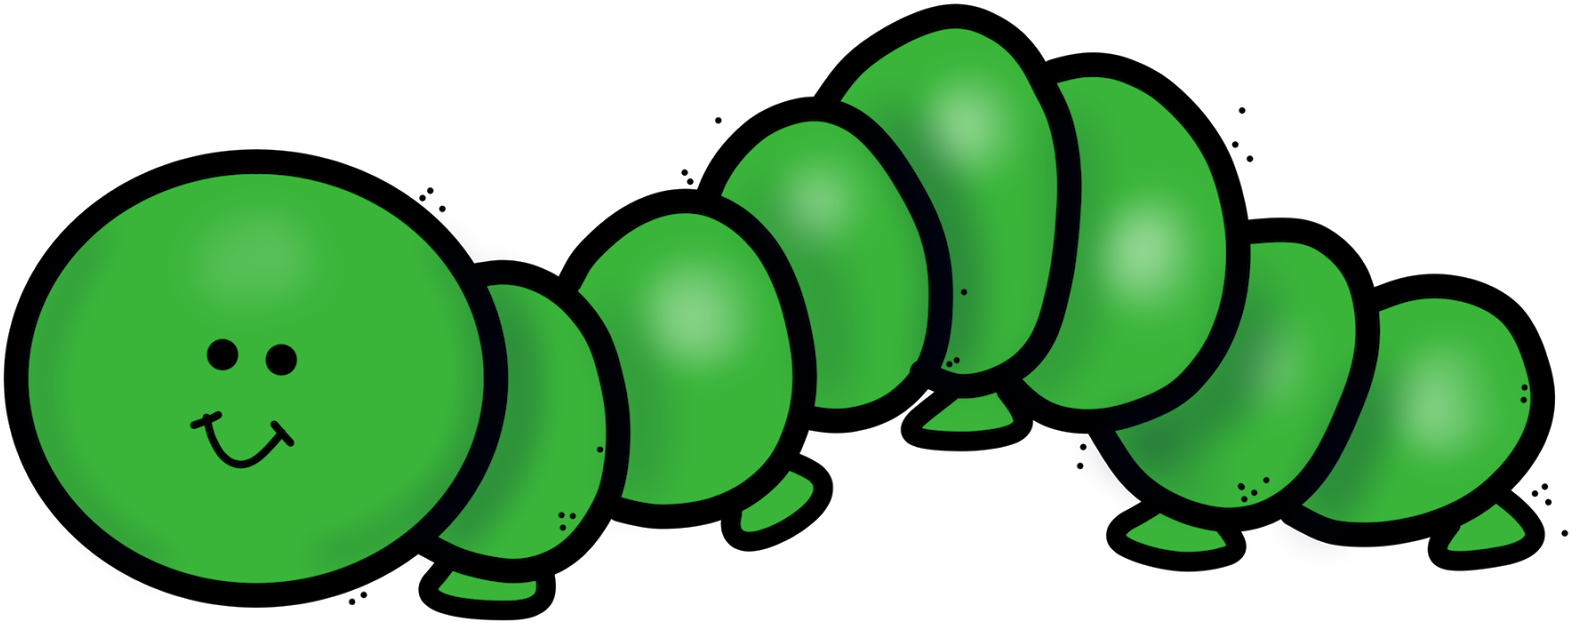 Tuesday, November 7, - Clipart Of An Inchworm (1600x670)